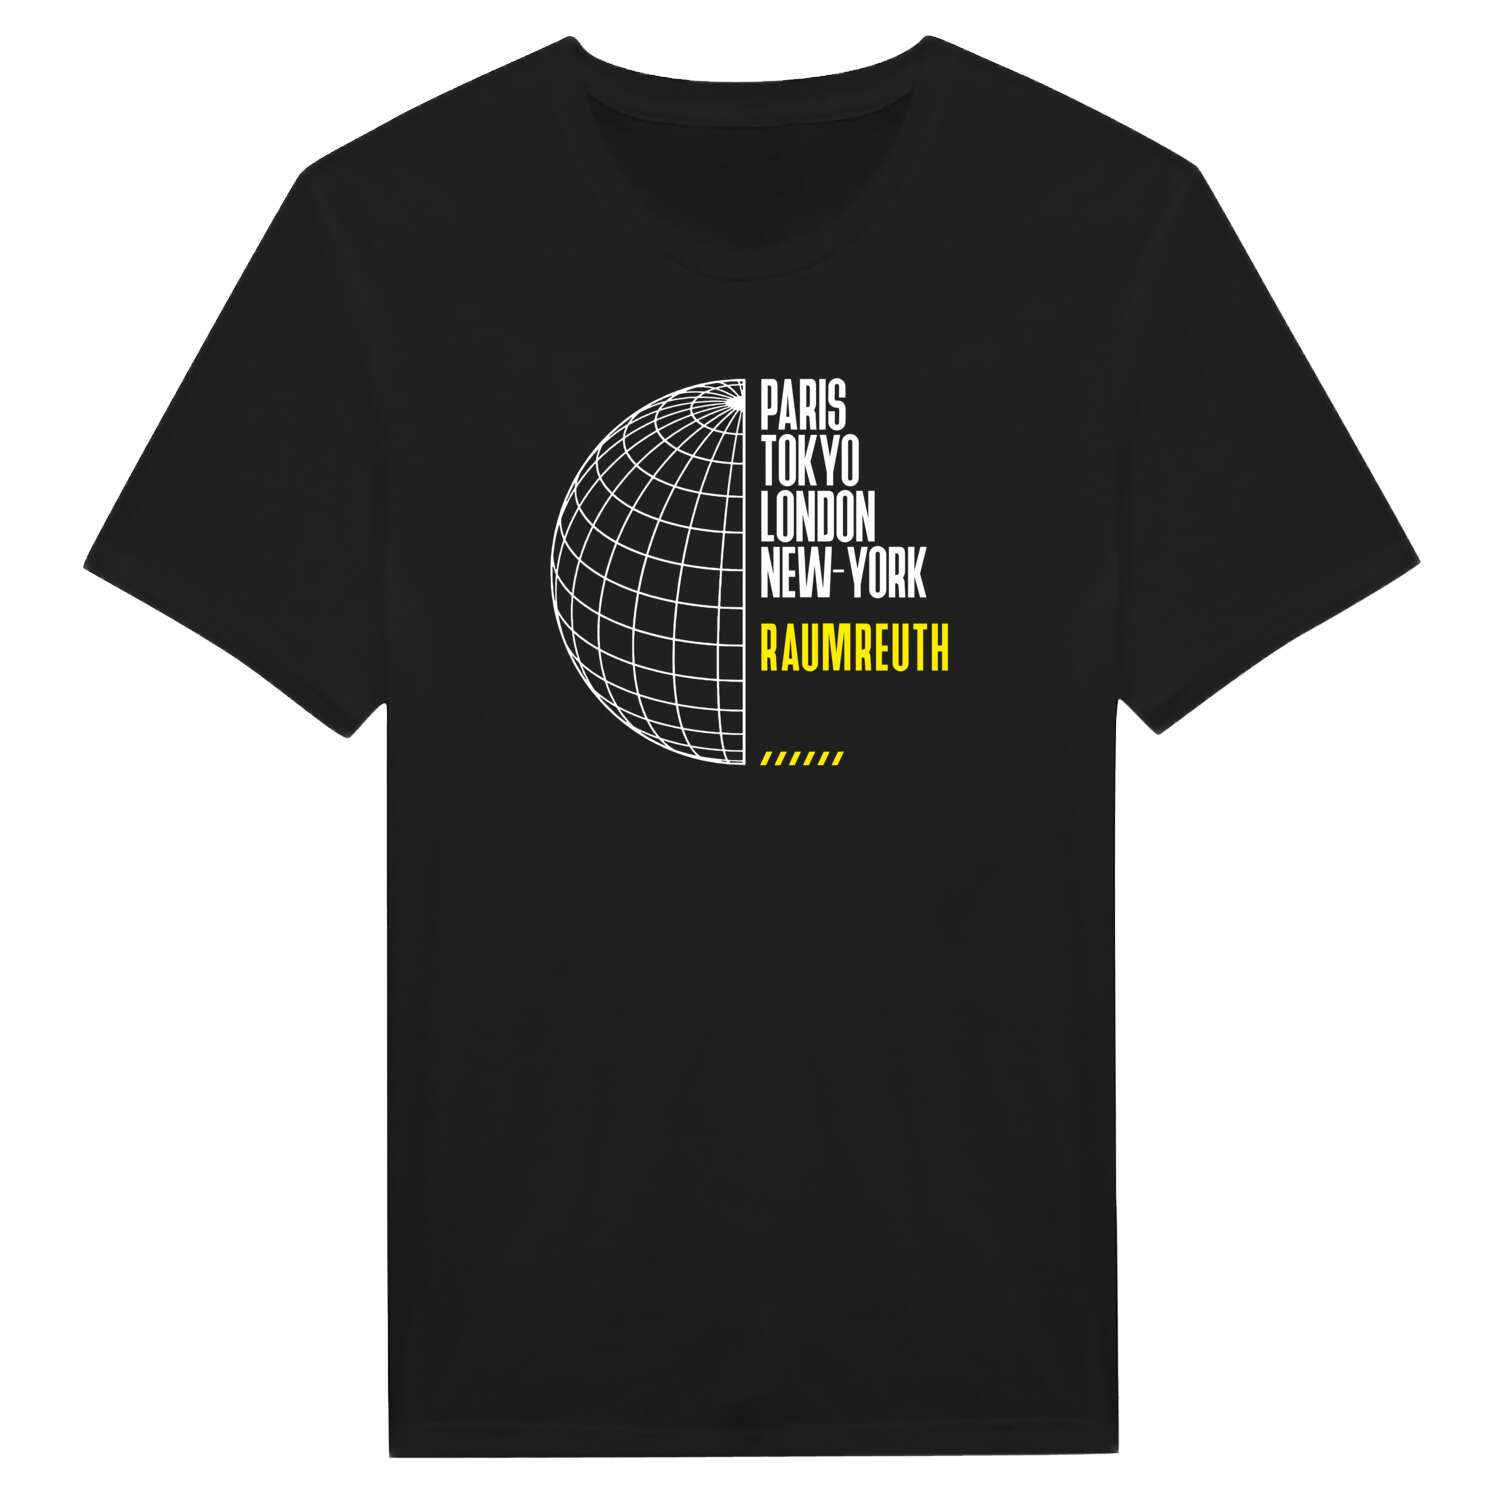 Raumreuth T-Shirt »Paris Tokyo London«